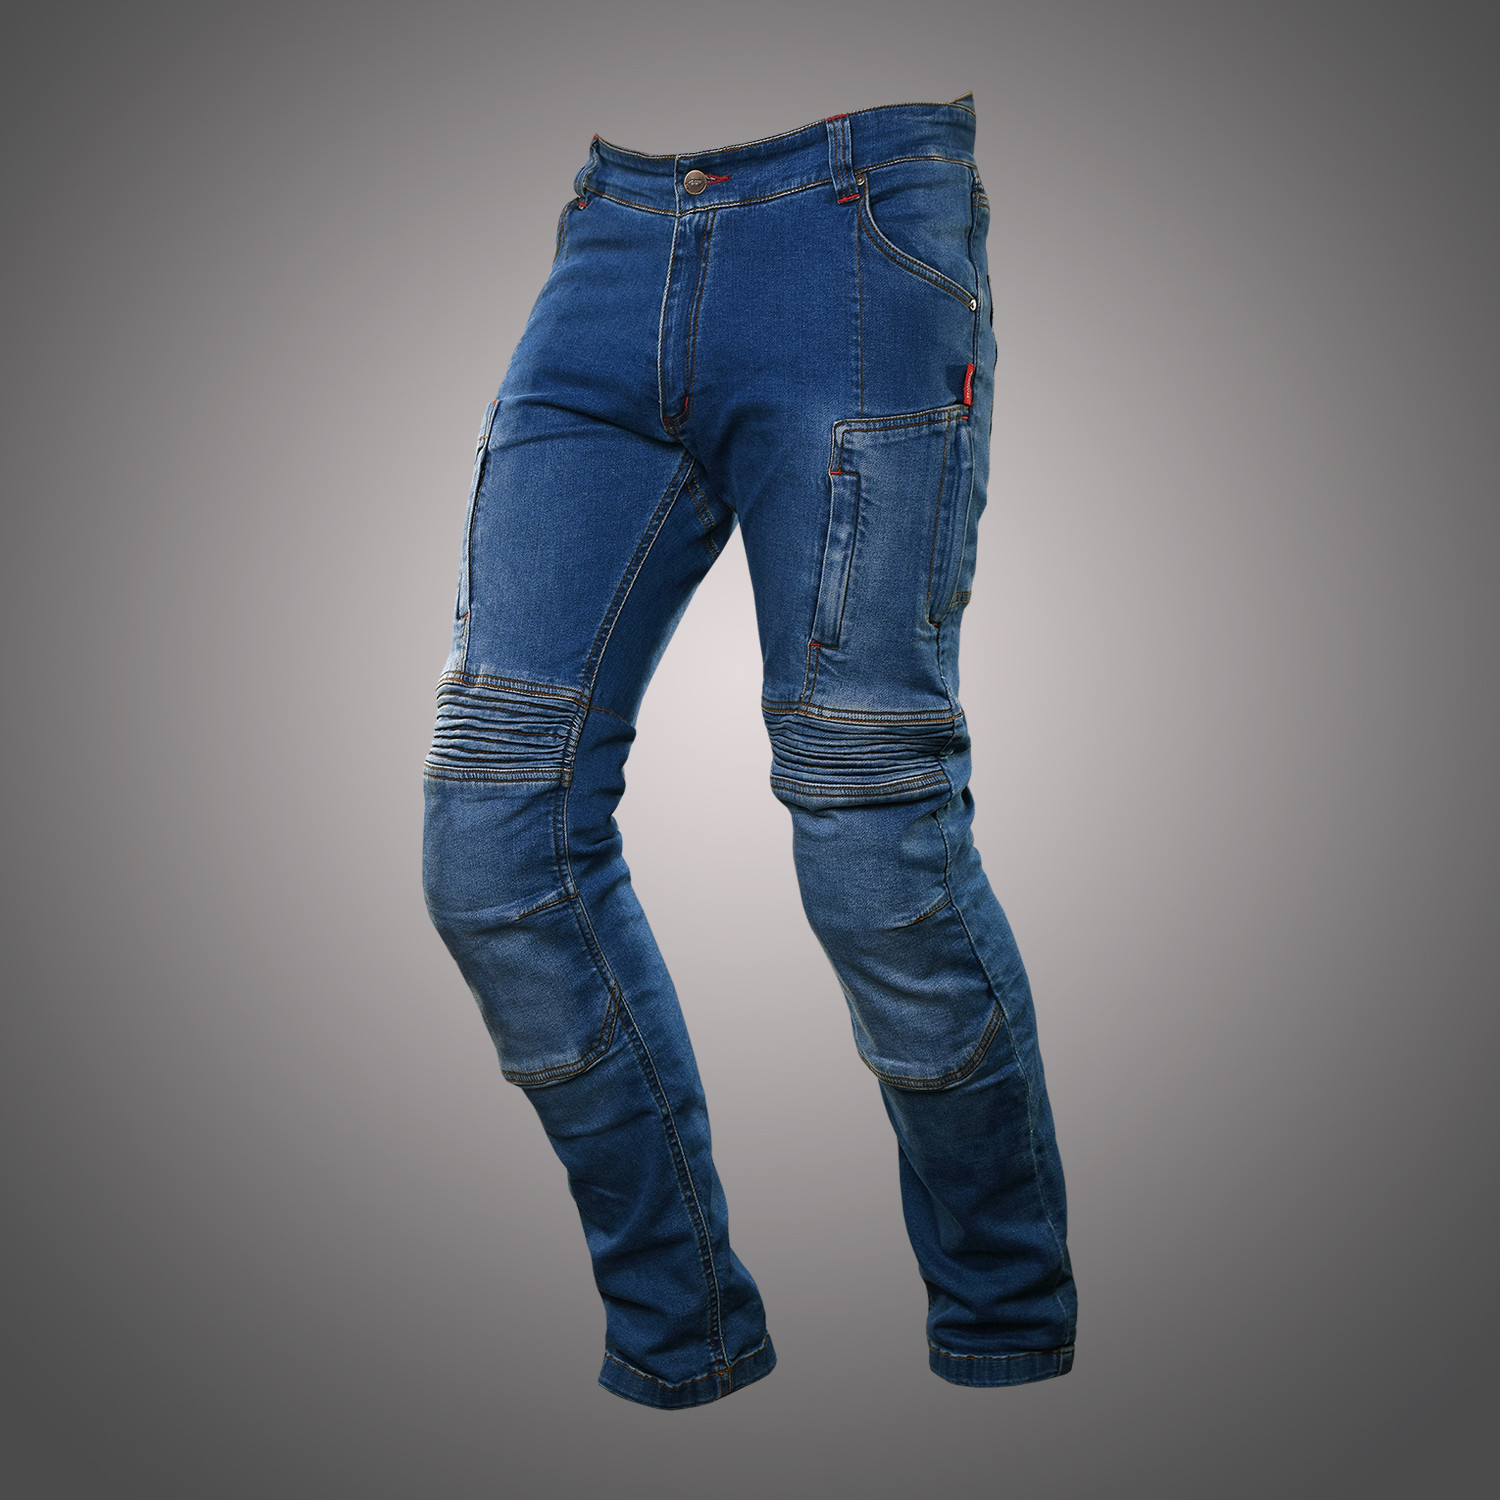 https://www.4sr.com/files/4sr/images/eshop/size5-15680343946062-232-4sr-club-sport-kevlar-jeans-1.jpg